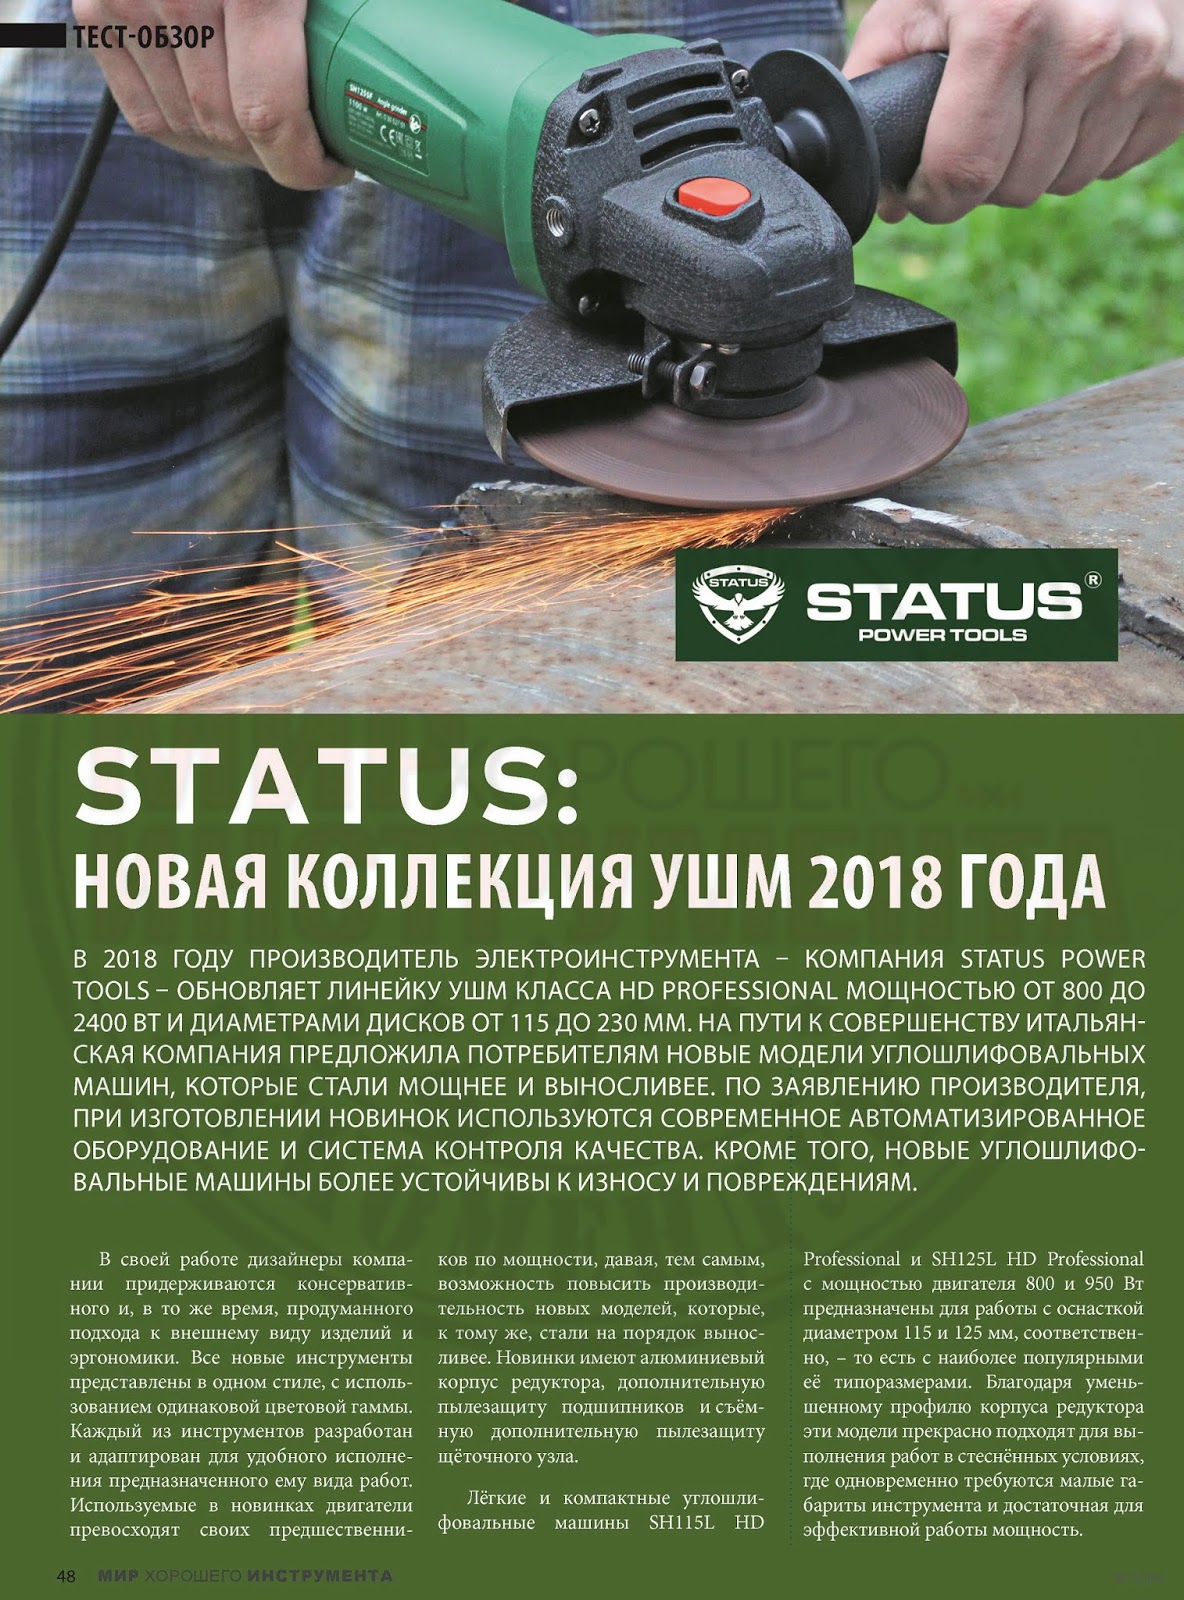 Status tools. Status инструмент. Производители электроинструмента. Электро инструмент фирмы статус. Название фирм электроинструментов.